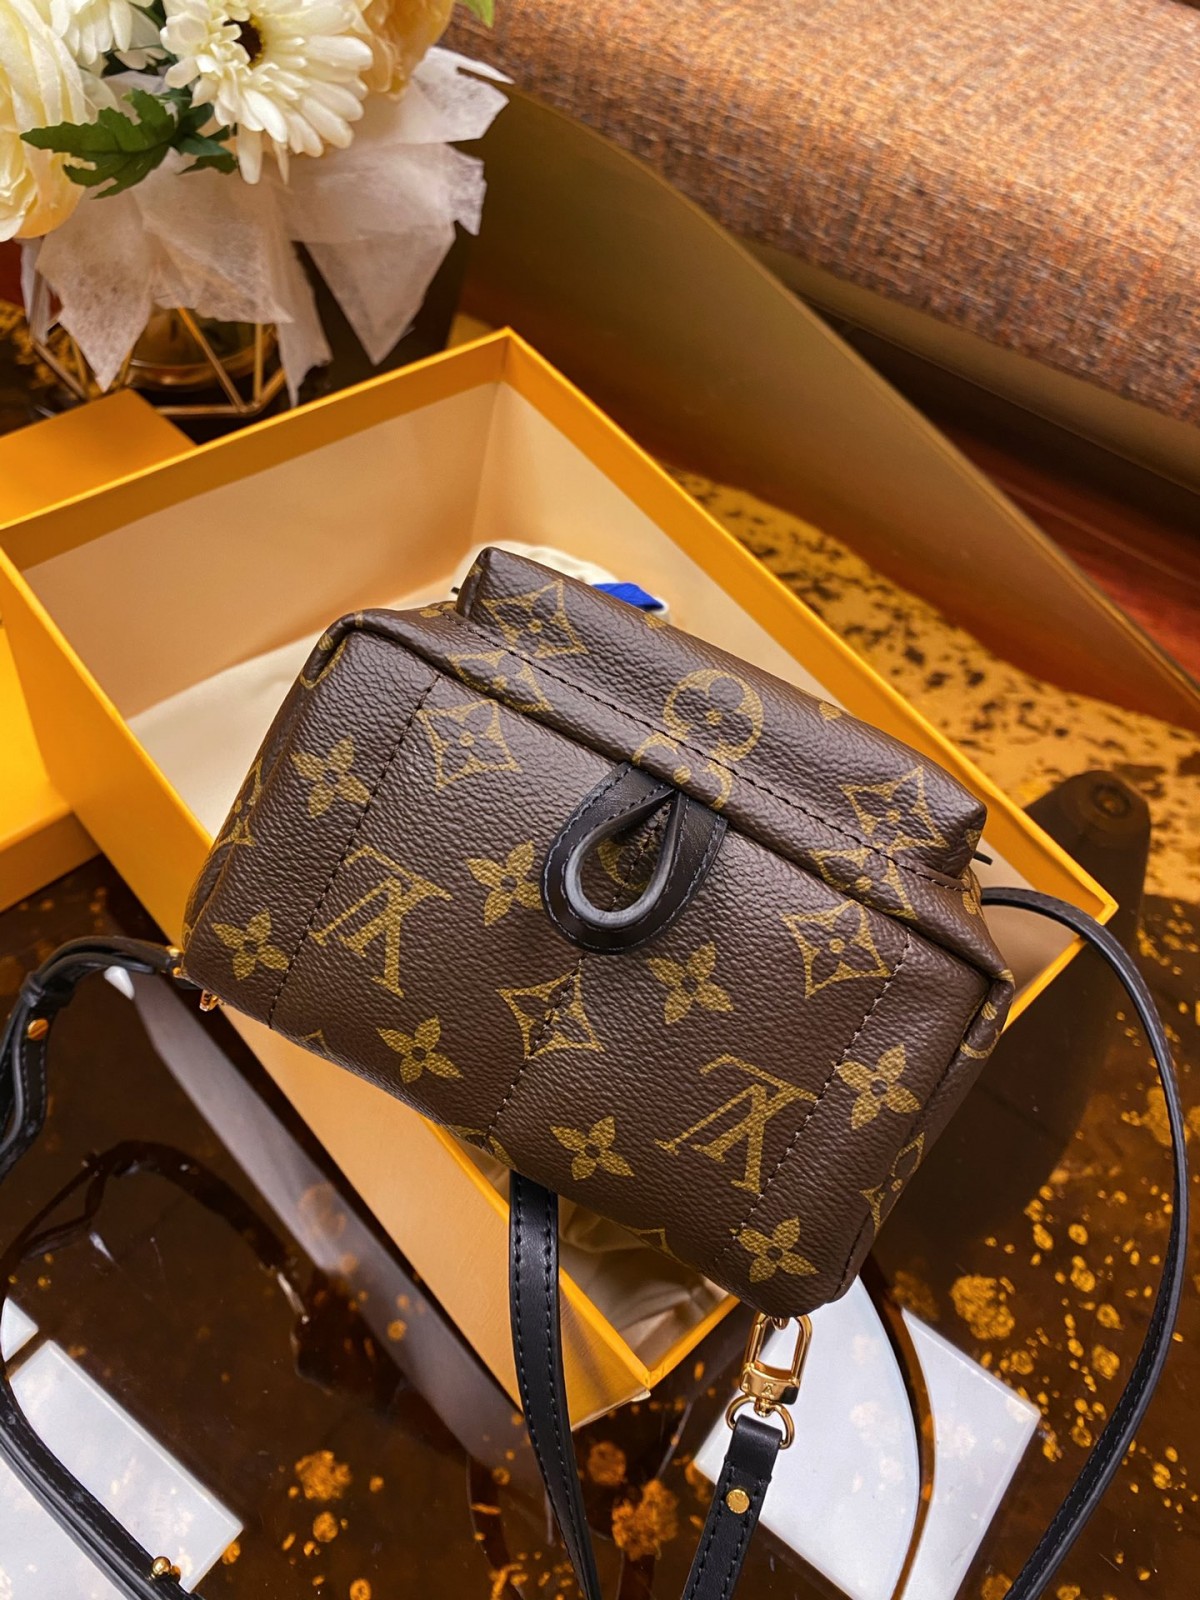 Louis Vuitton mekotla replica replica maikutlo (2022 ntjhafatswa) - Best Quality Fake Louis Vuitton Bag Online Store, Replica designer bag ru